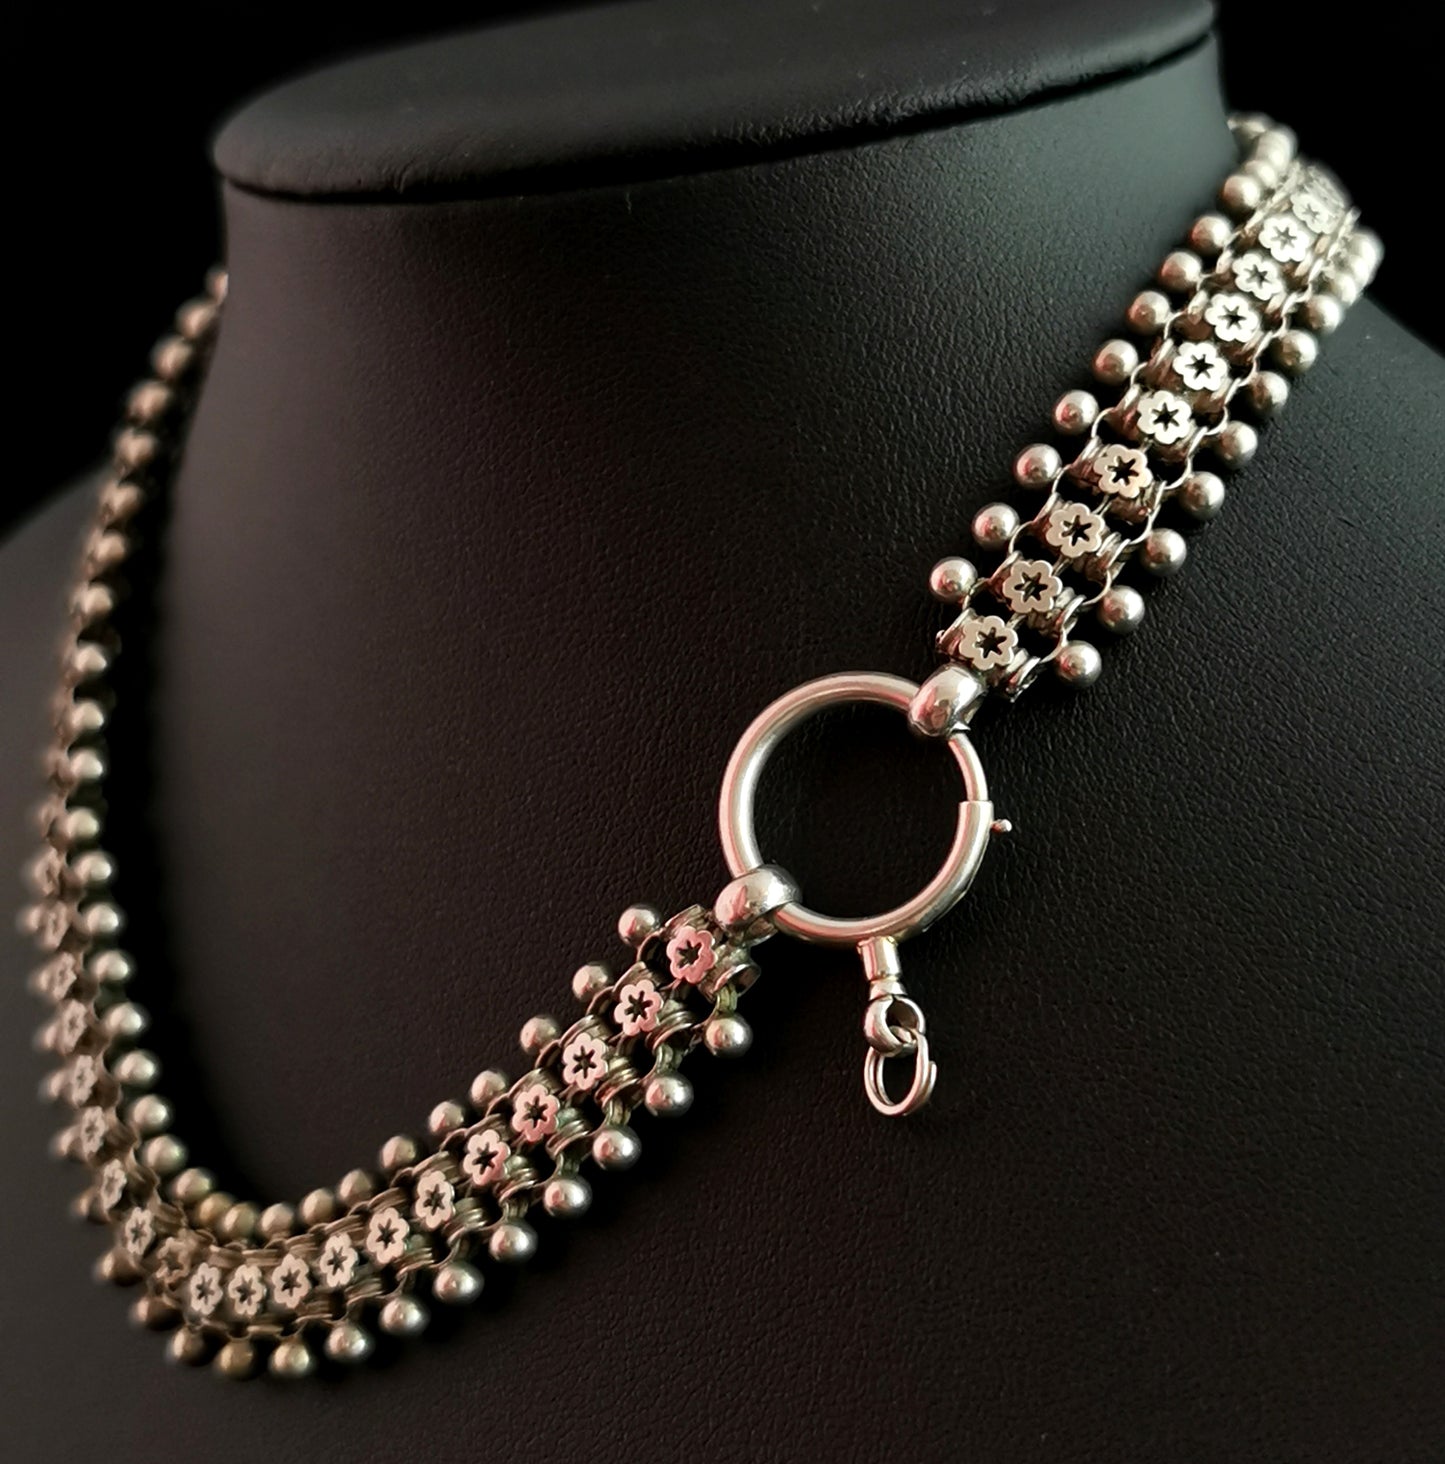 Antique Victorian silver collar necklace, pierced links